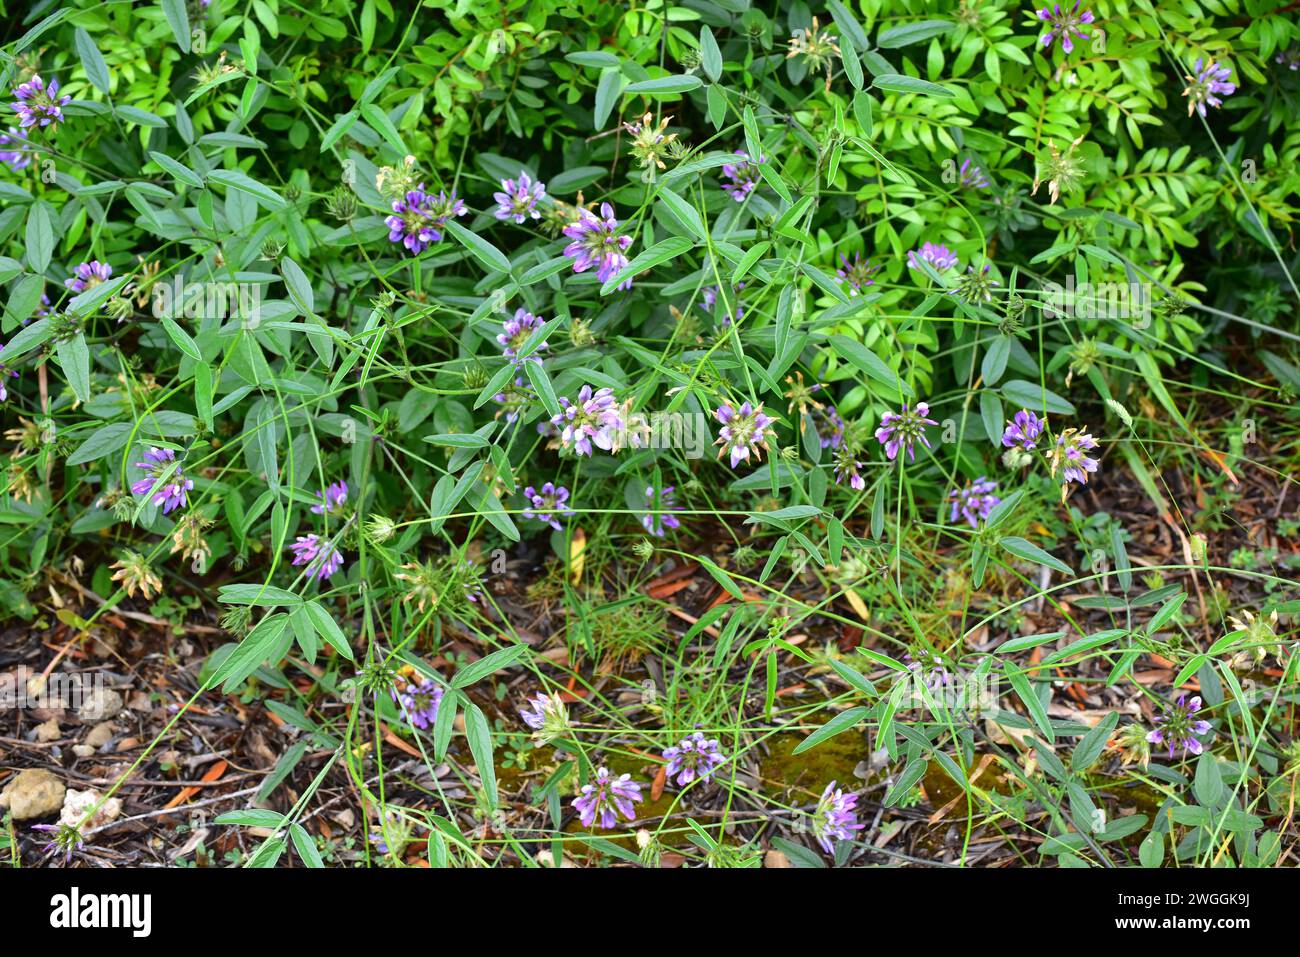 Arabian pea or pitch trefoil (Bituminaria bituminosa or Psoralea bituminosa) is a perennial herb native to Mediterranean Basin and western Asia. This Stock Photo